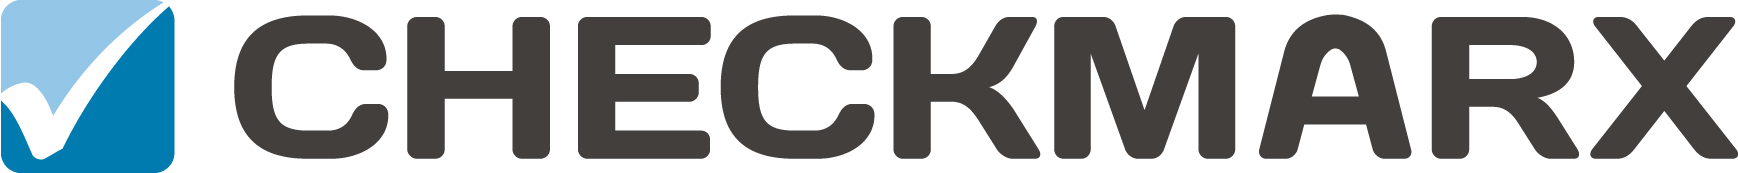 Checkmarx Logo